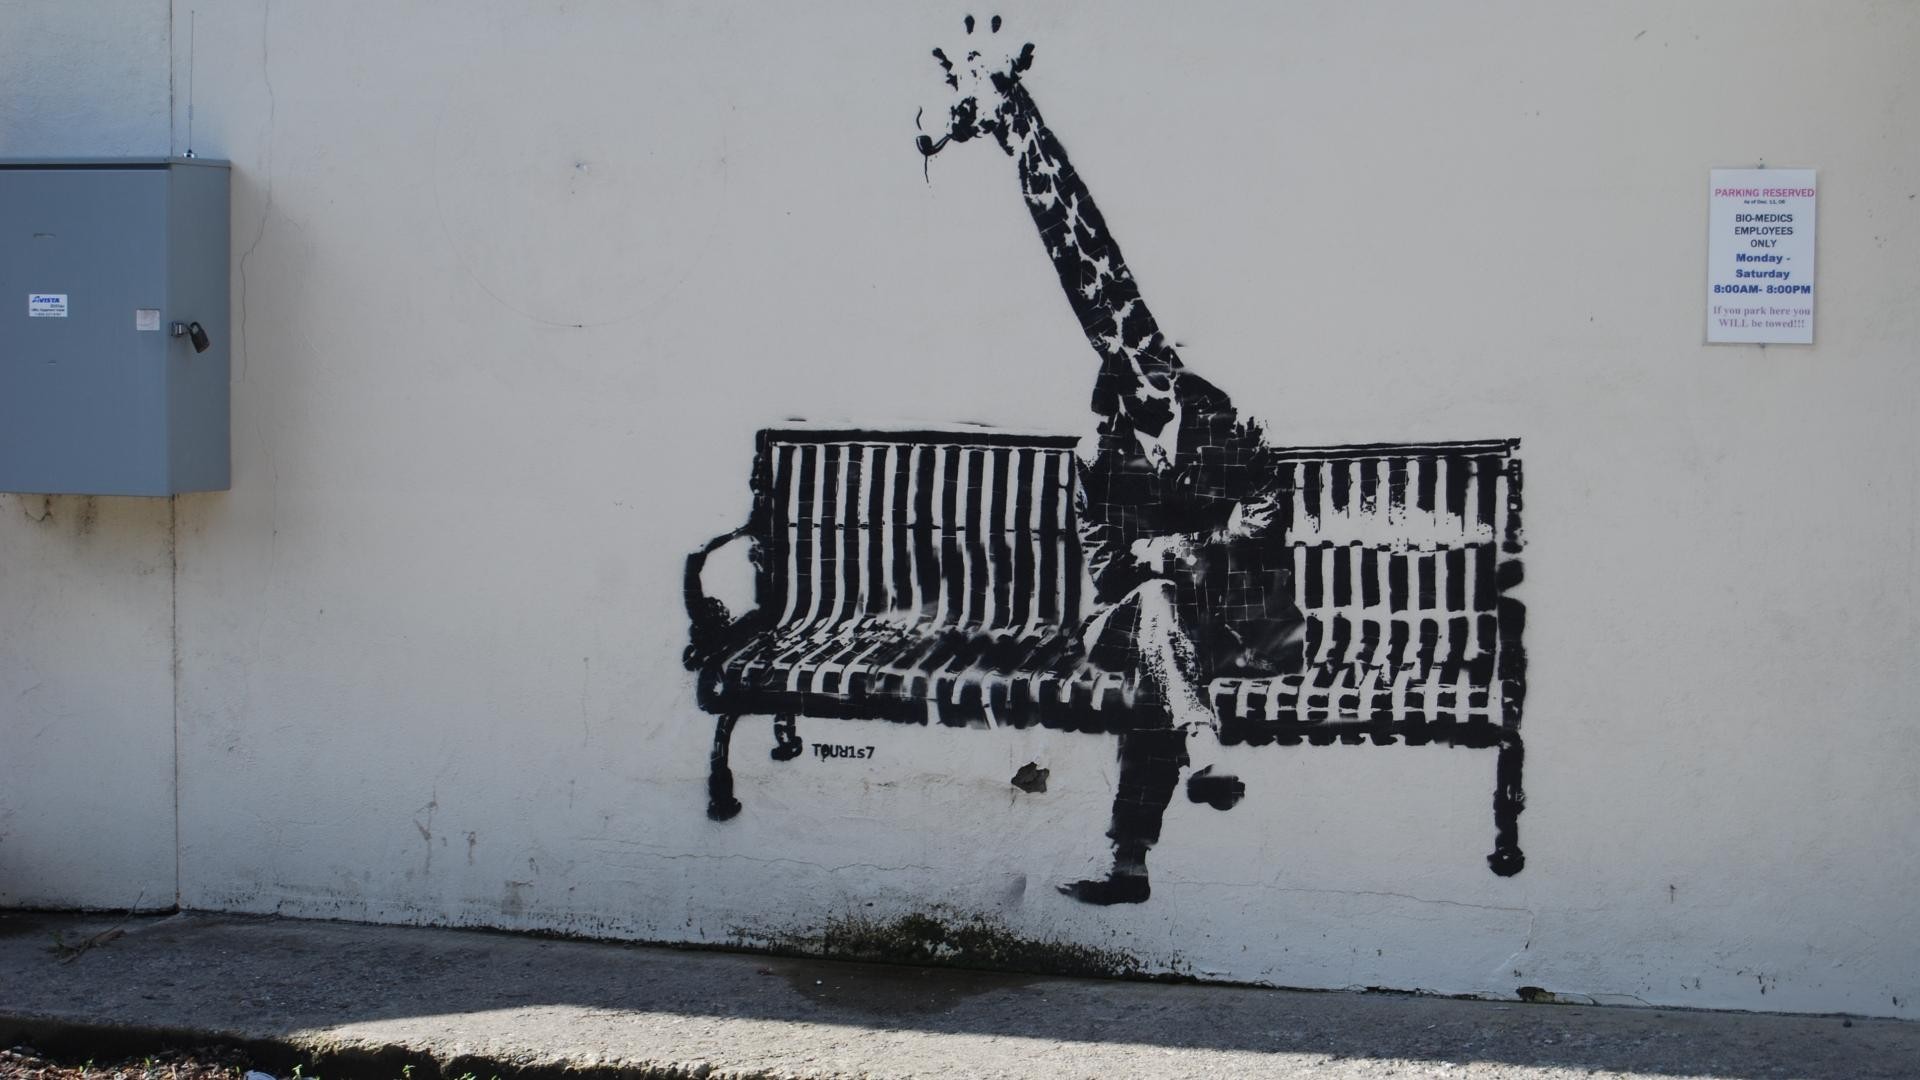 1920x1080 General  artwork animals graffiti wall Banksy bench sitting legs  giraffes shadow street art